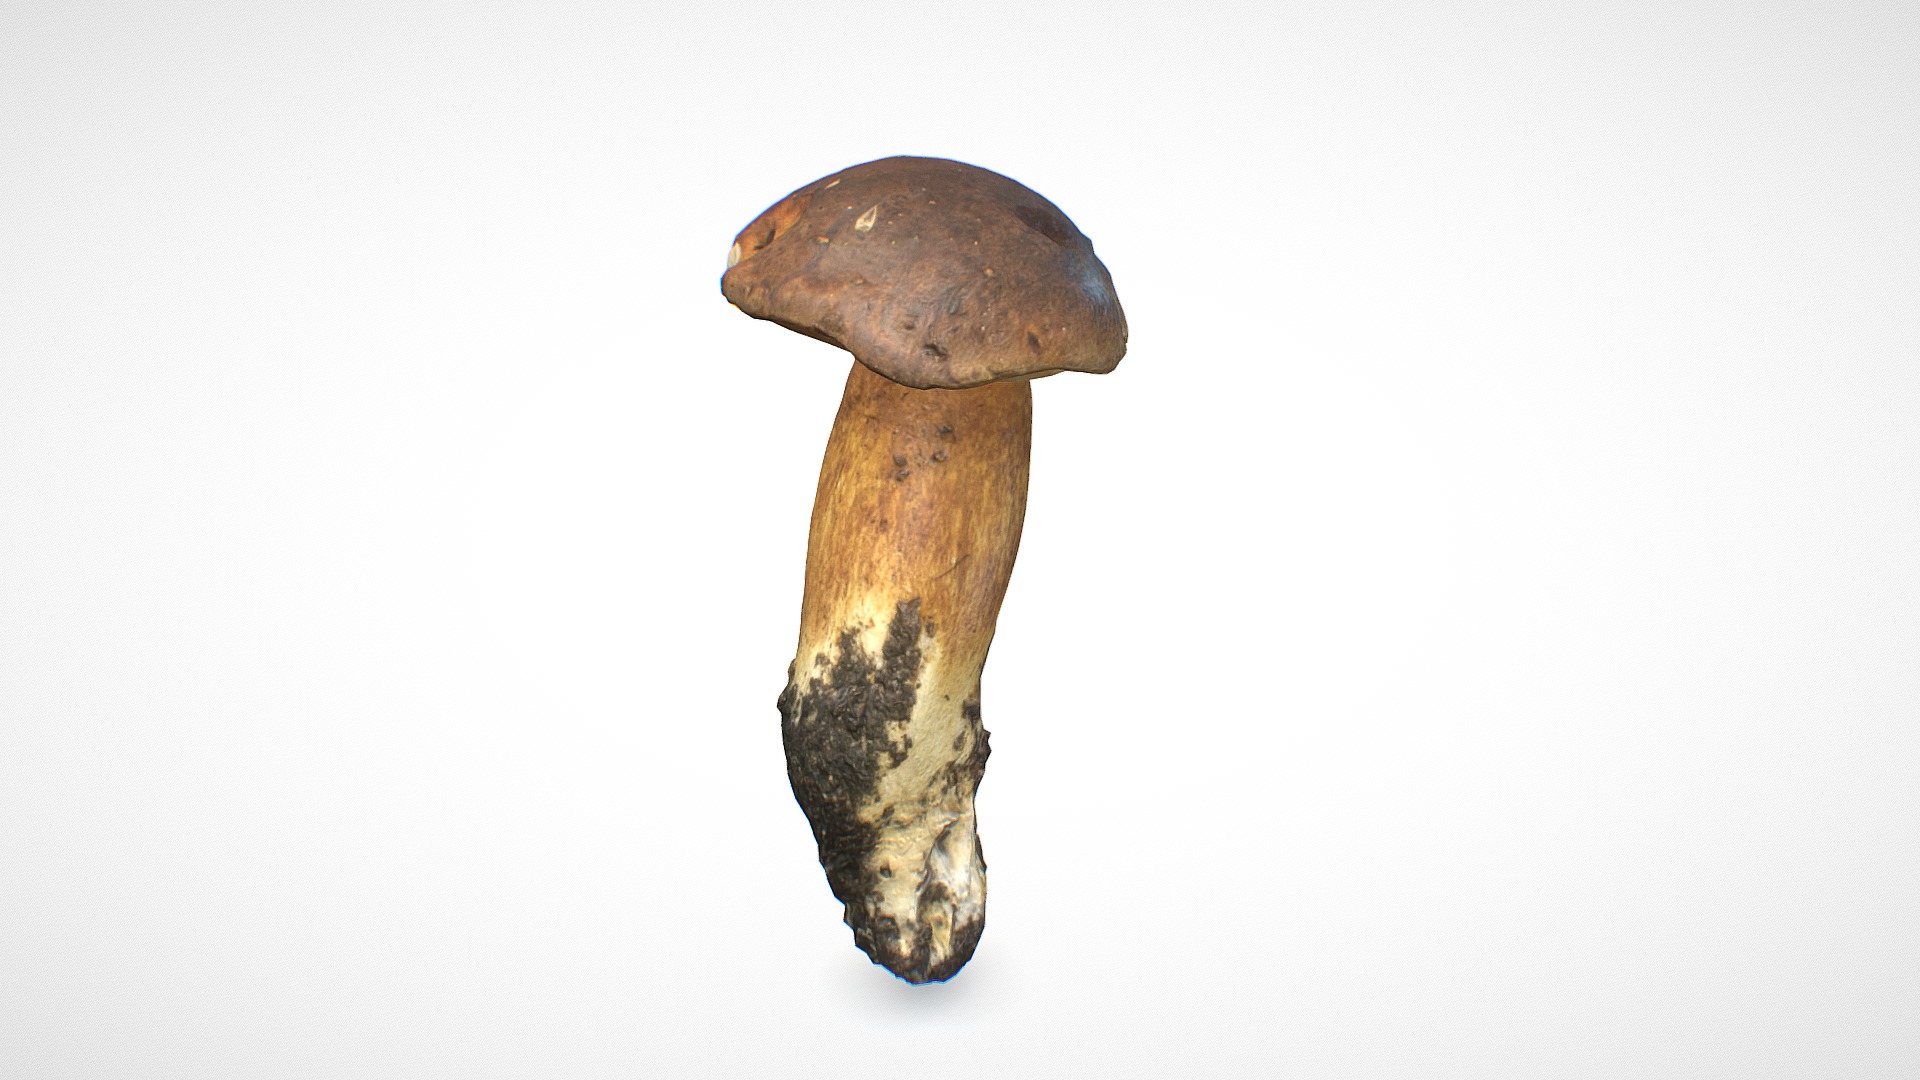 3D model Penny Bun mushroom 7 – retopo 8K PBR - This is a 3D model of the Penny Bun mushroom 7 - retopo 8K PBR. The 3D model is about a mushroom with a white background.